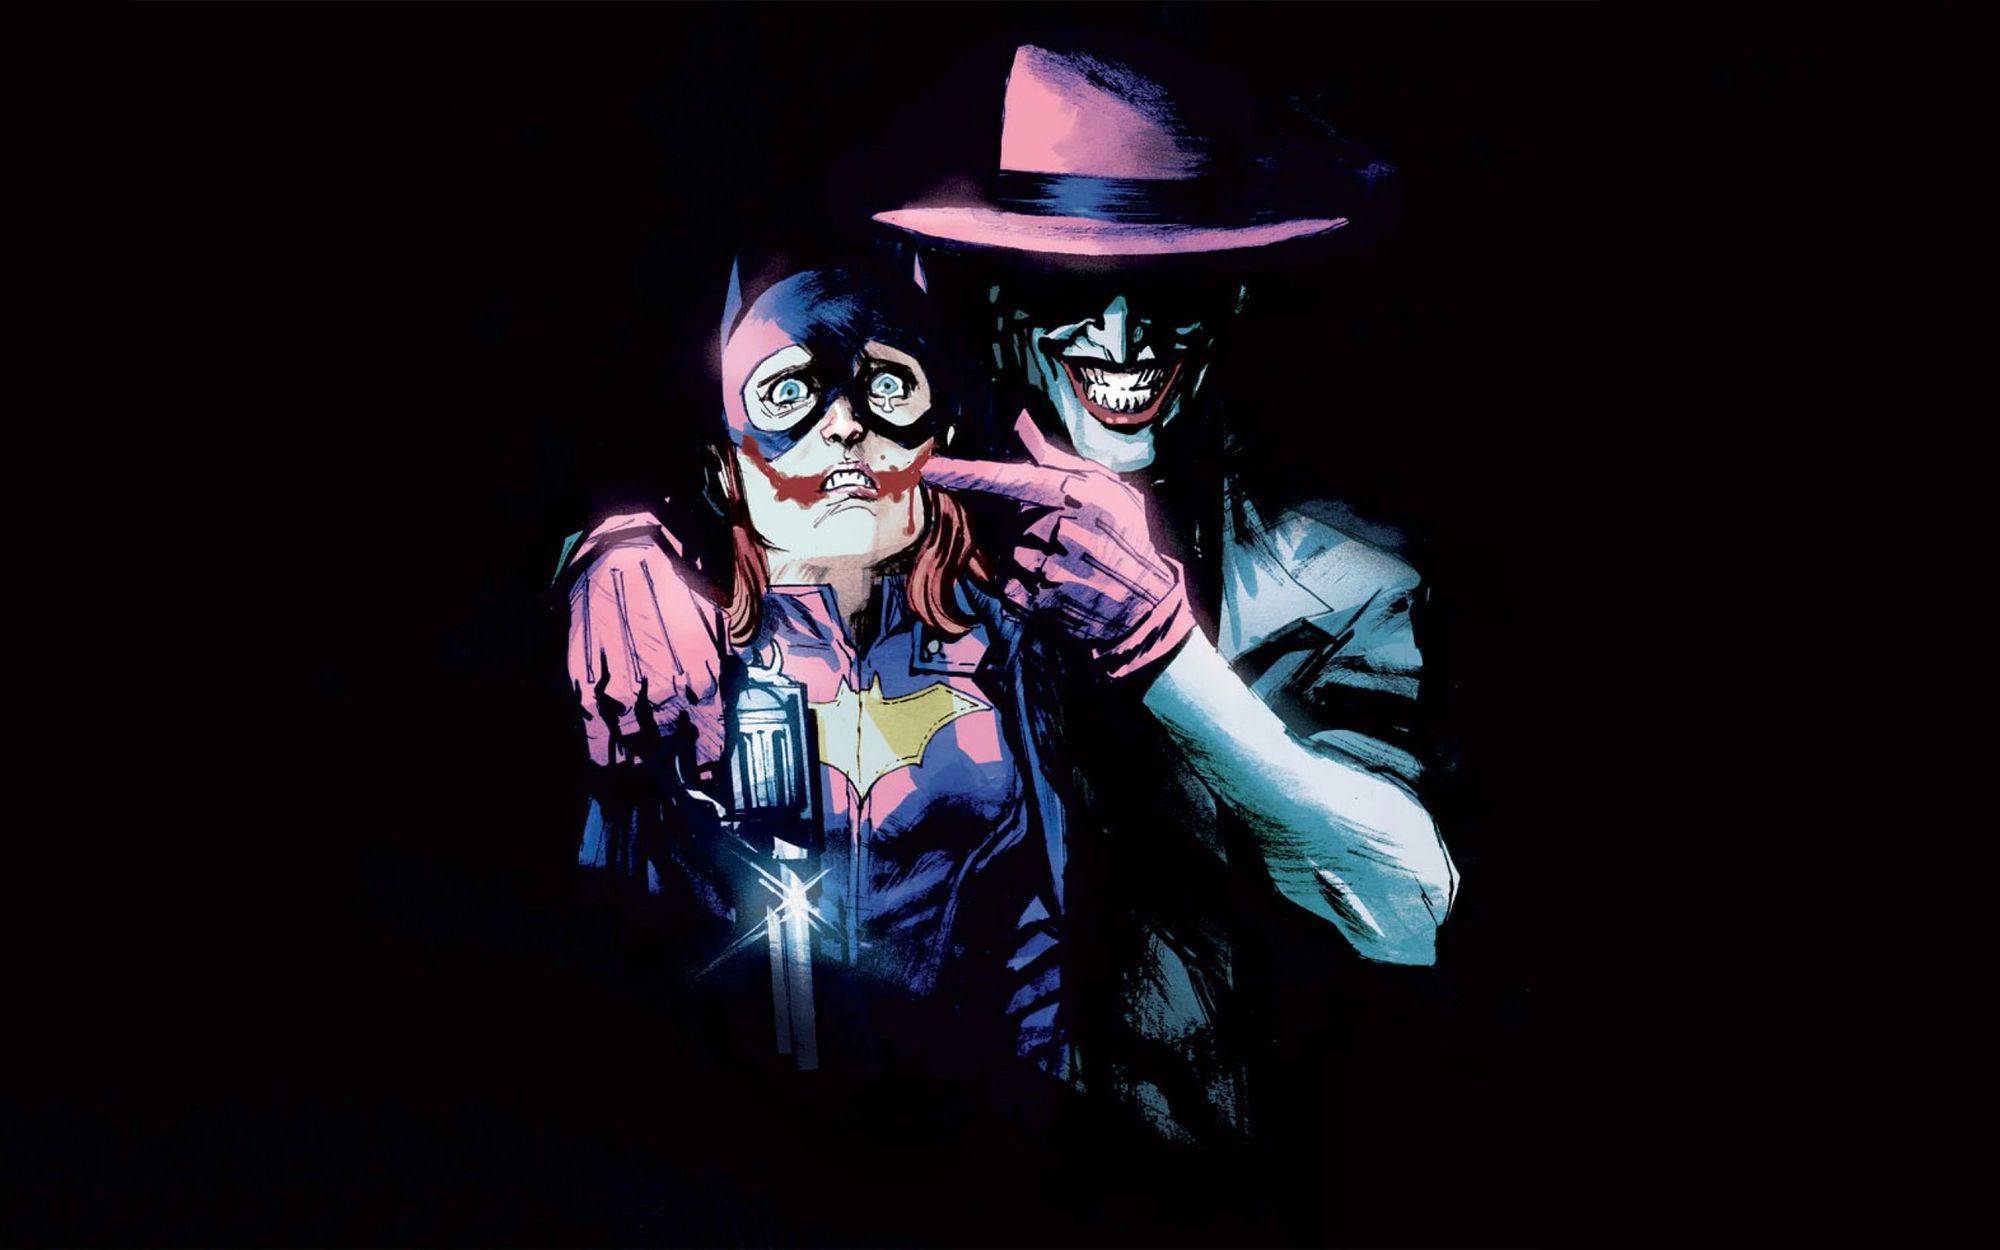 The joker & Bat Girl. Joker wallpaper, Dc comics wallpaper, Joker art